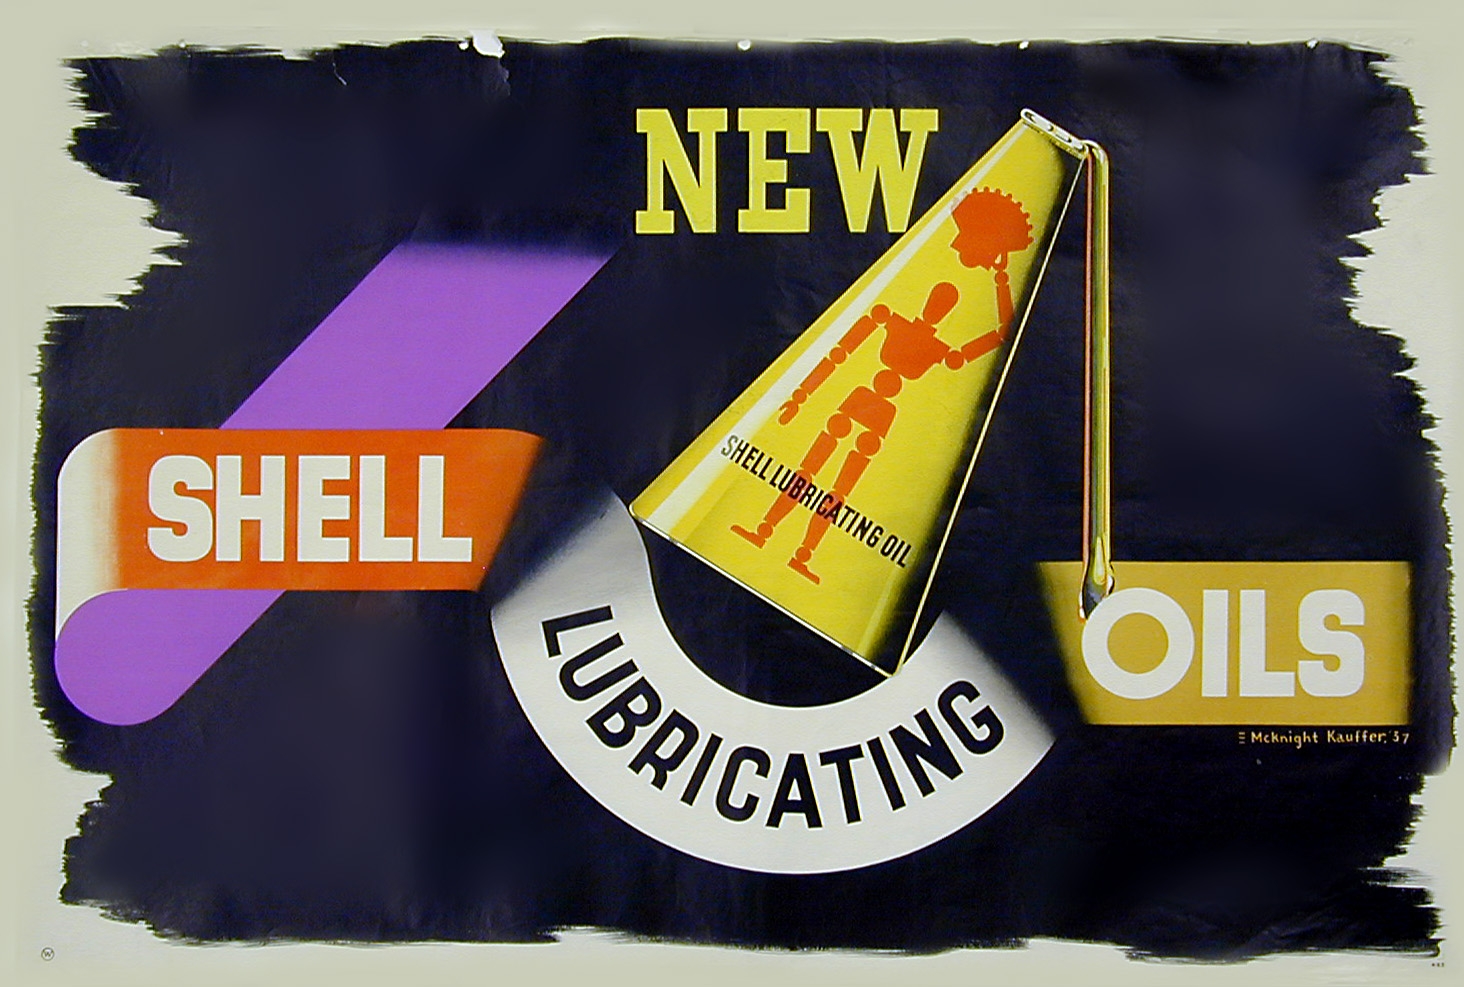 Poster of New Shell Lubricating Oils by Edward McKnight Kauffer, 1937